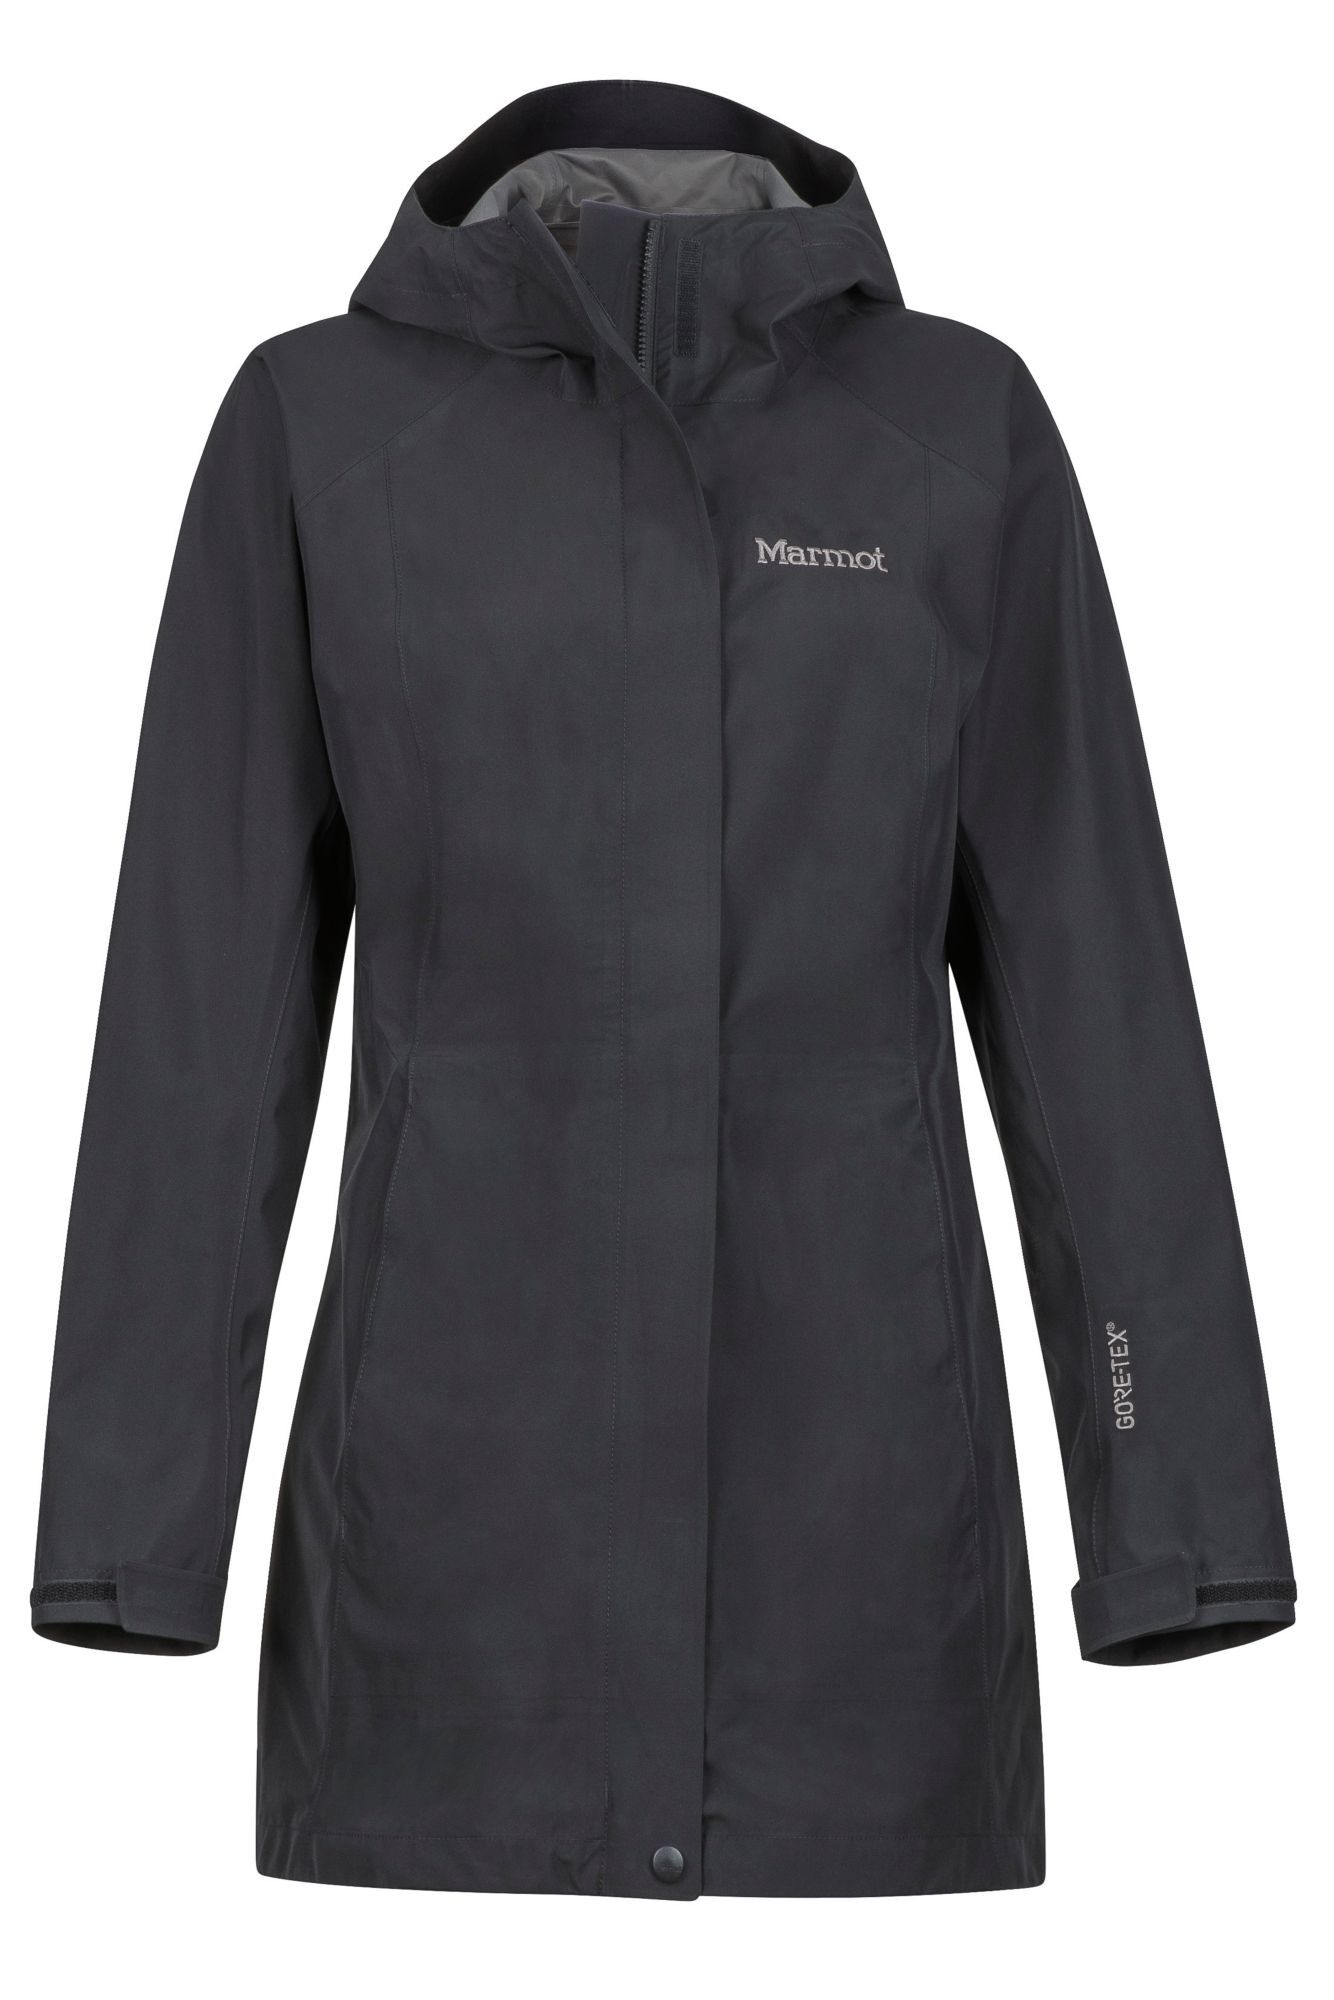 Marmot Essential Jacket - Hardshell jacket - Women's